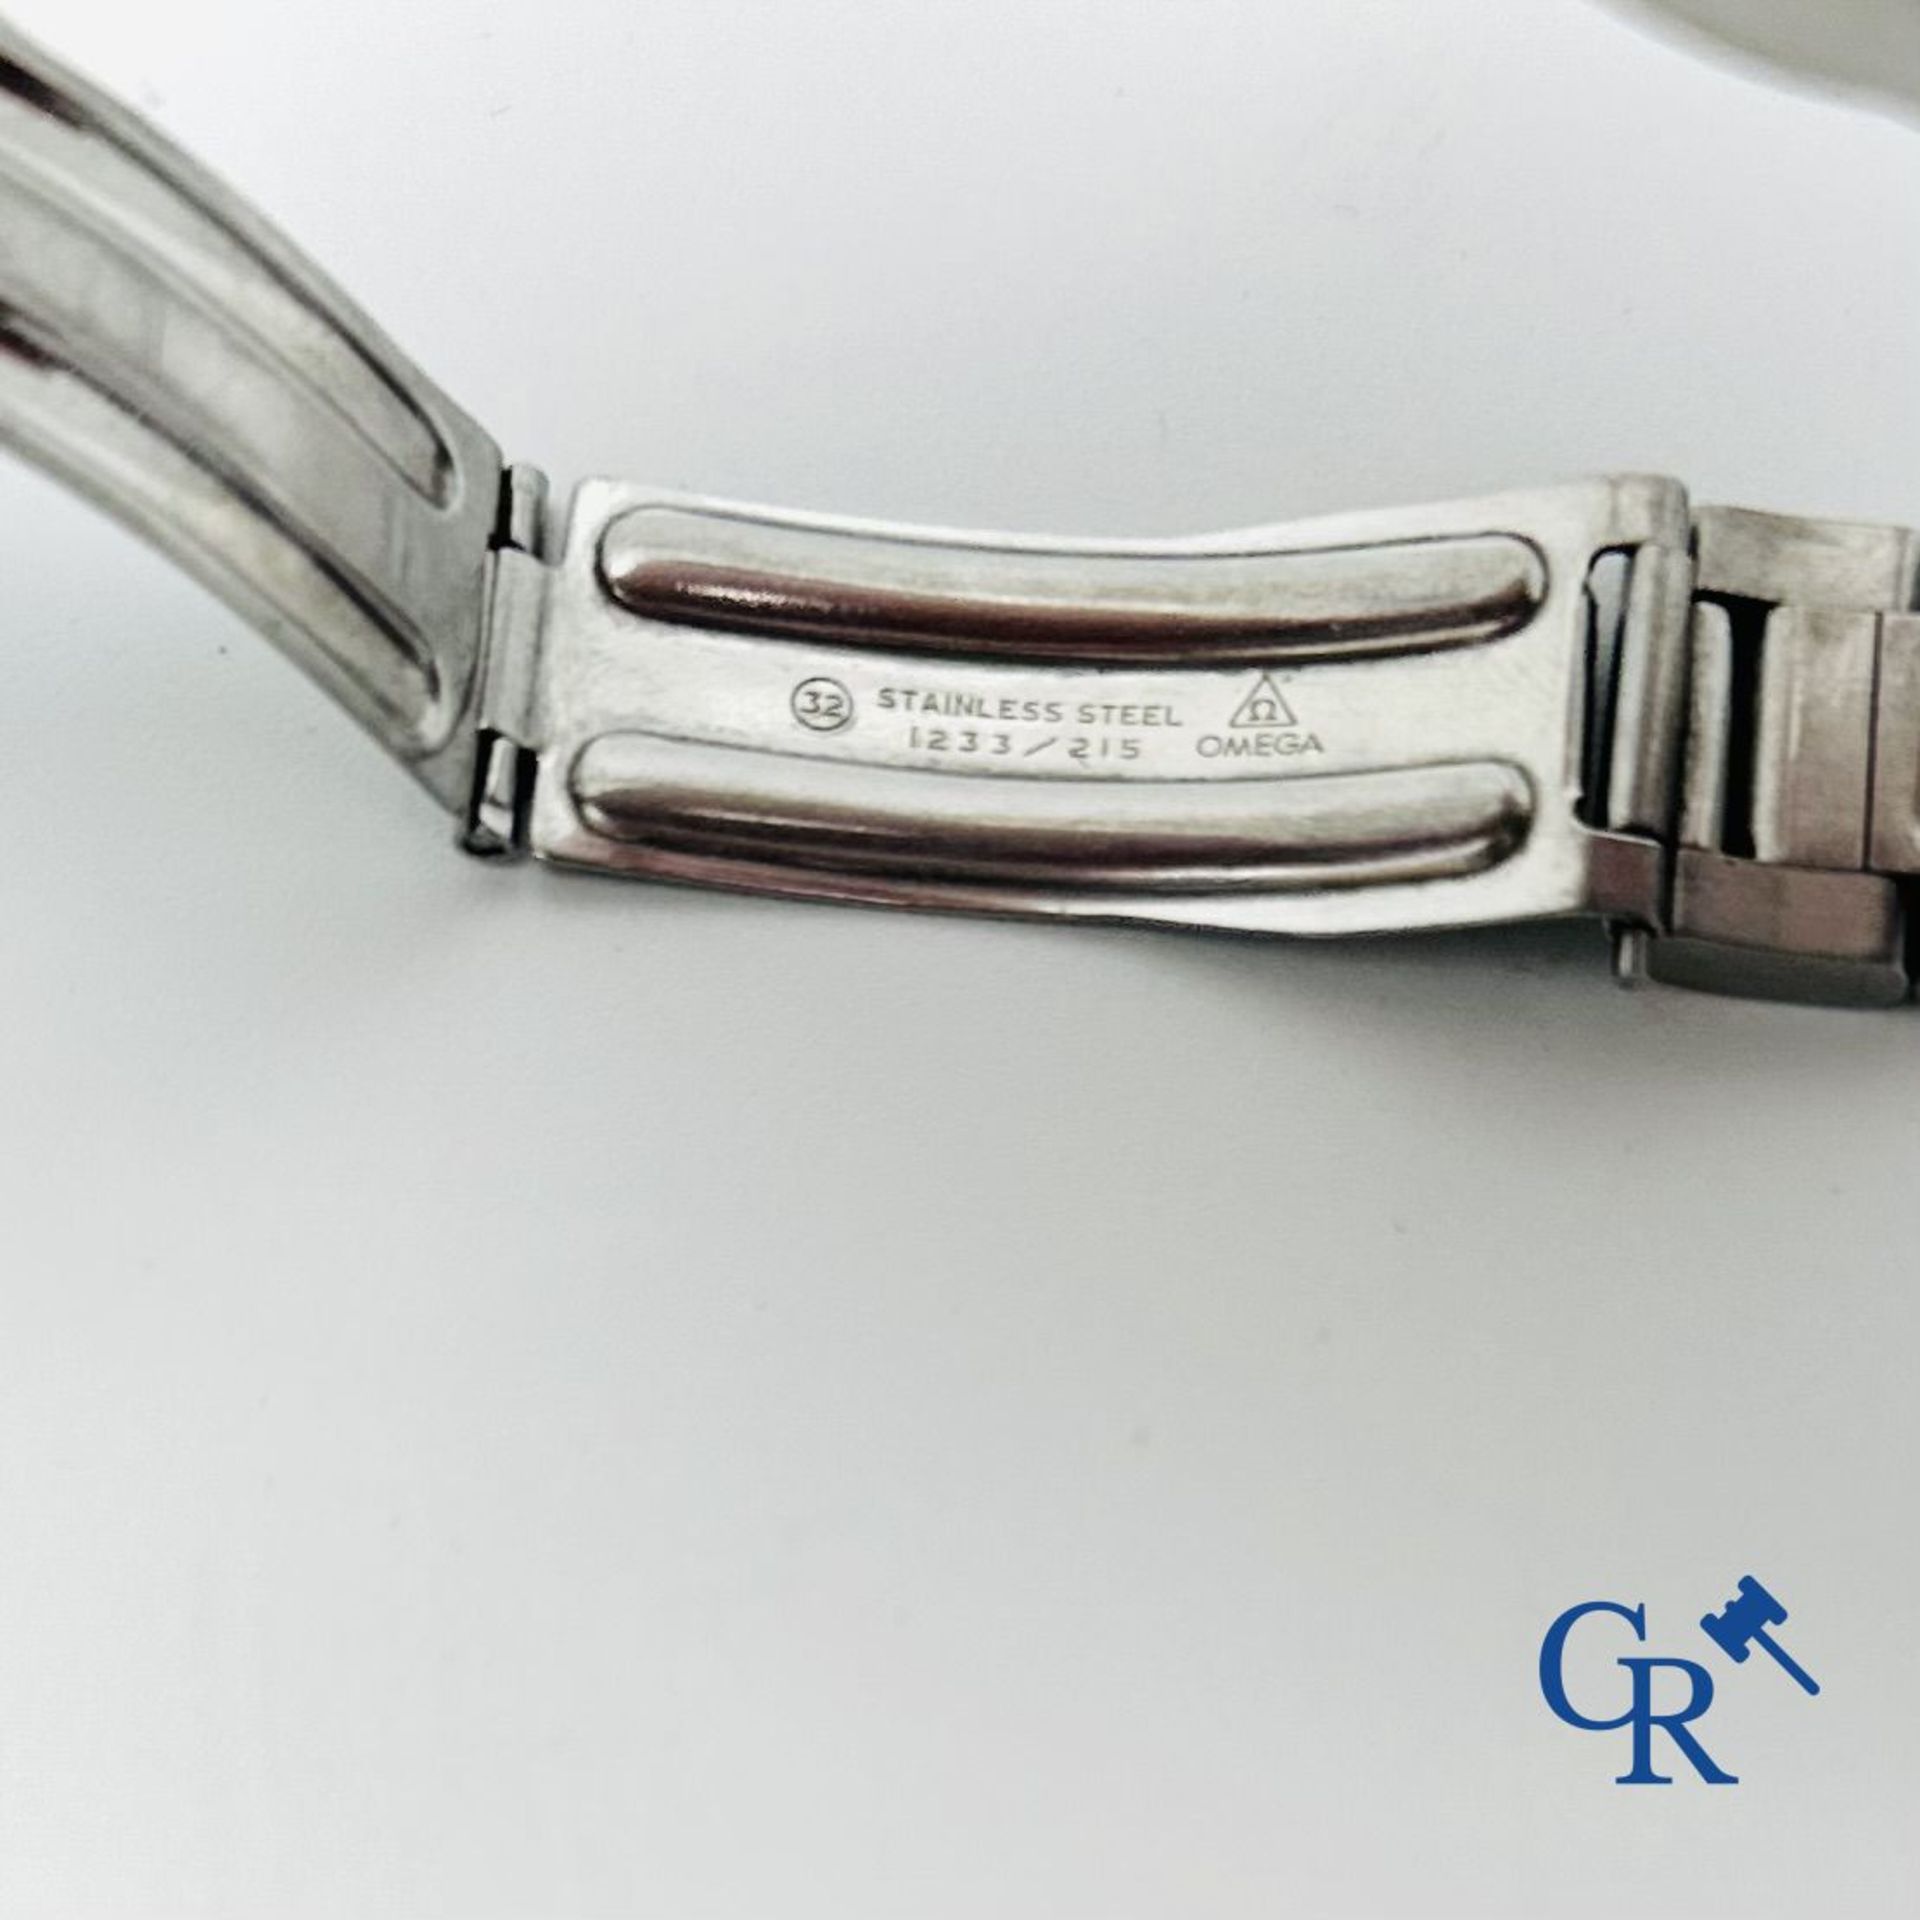 Watches: Oméga Automatic Geneva: Men's wristwatch. - Image 4 of 4